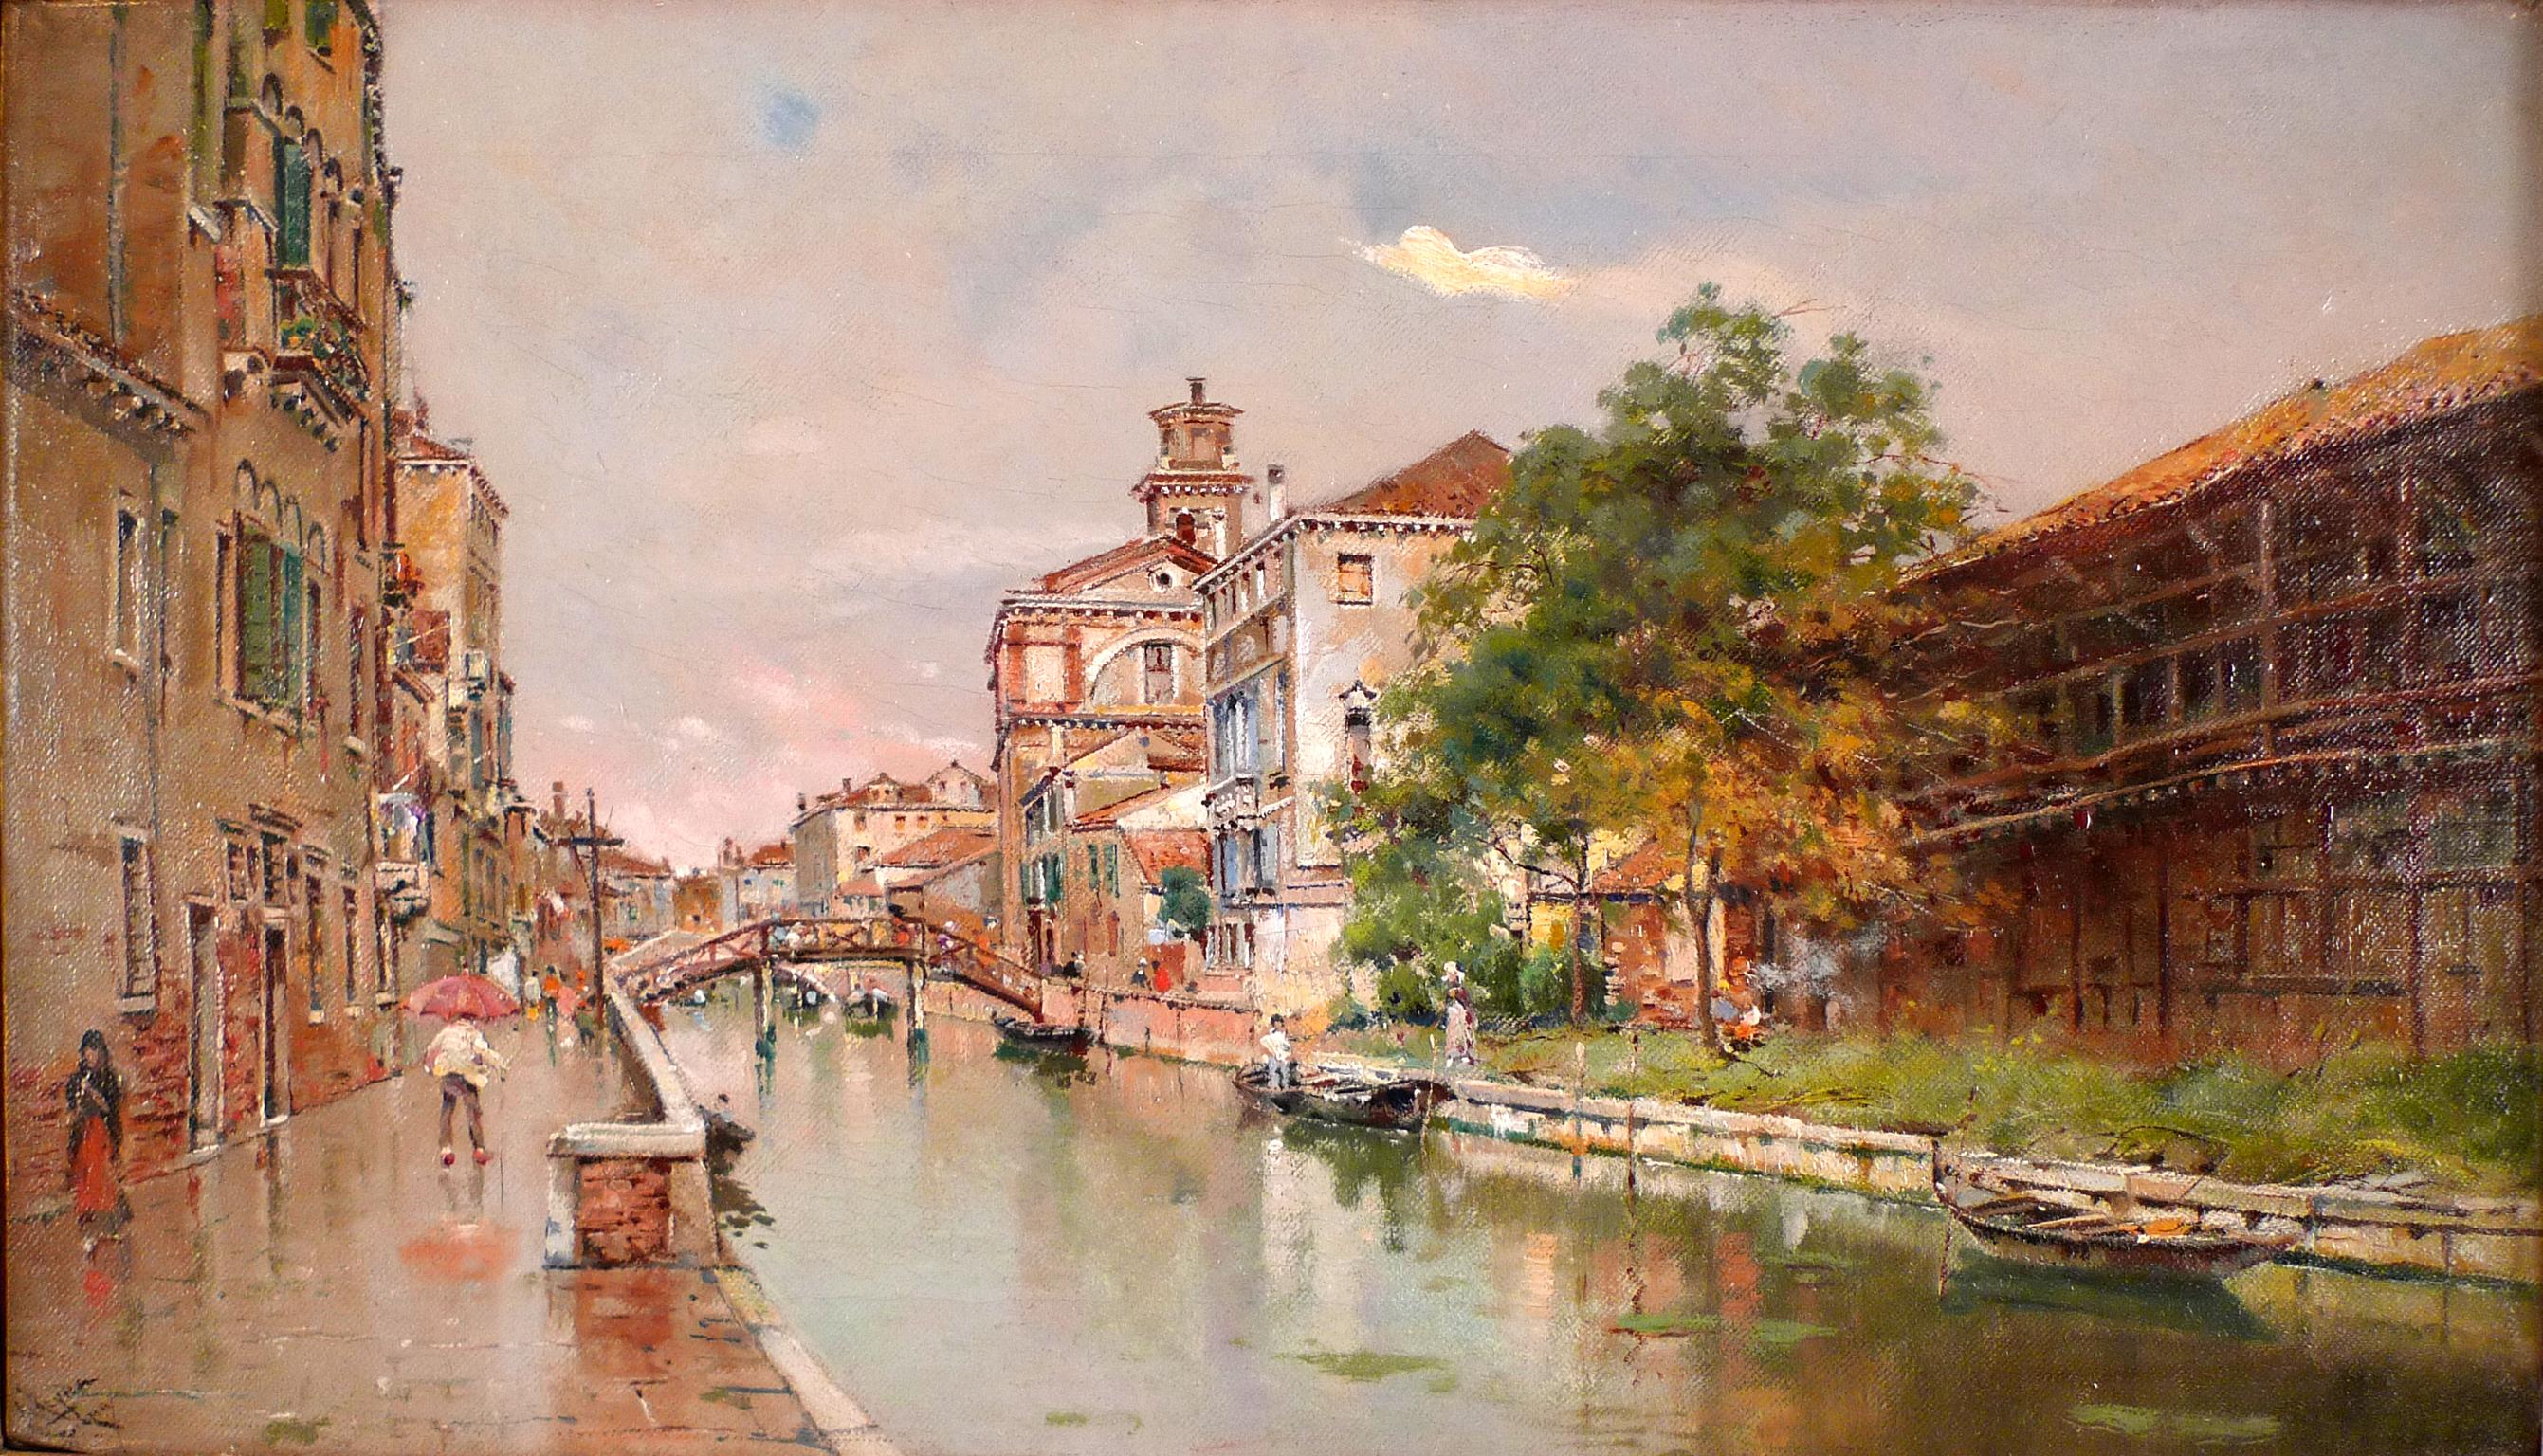 "Venetian Canal" Late 19th Century Oil on Canvas by Spanish Artist Antonio Reyna